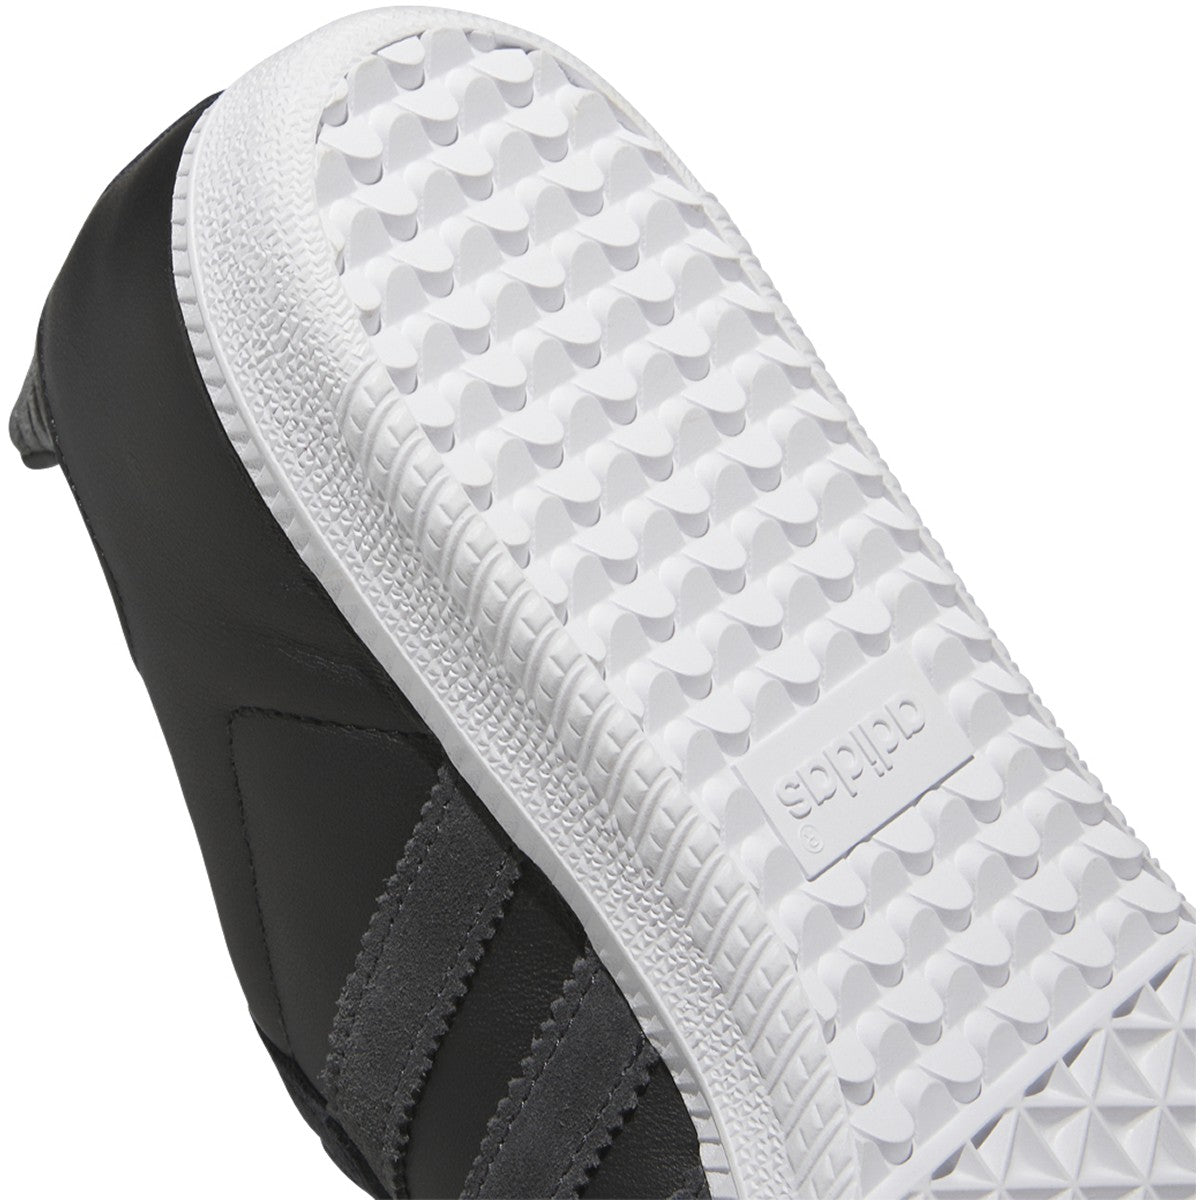 Black/Carbon Samba ADV Adidas Skate Shoe Detail